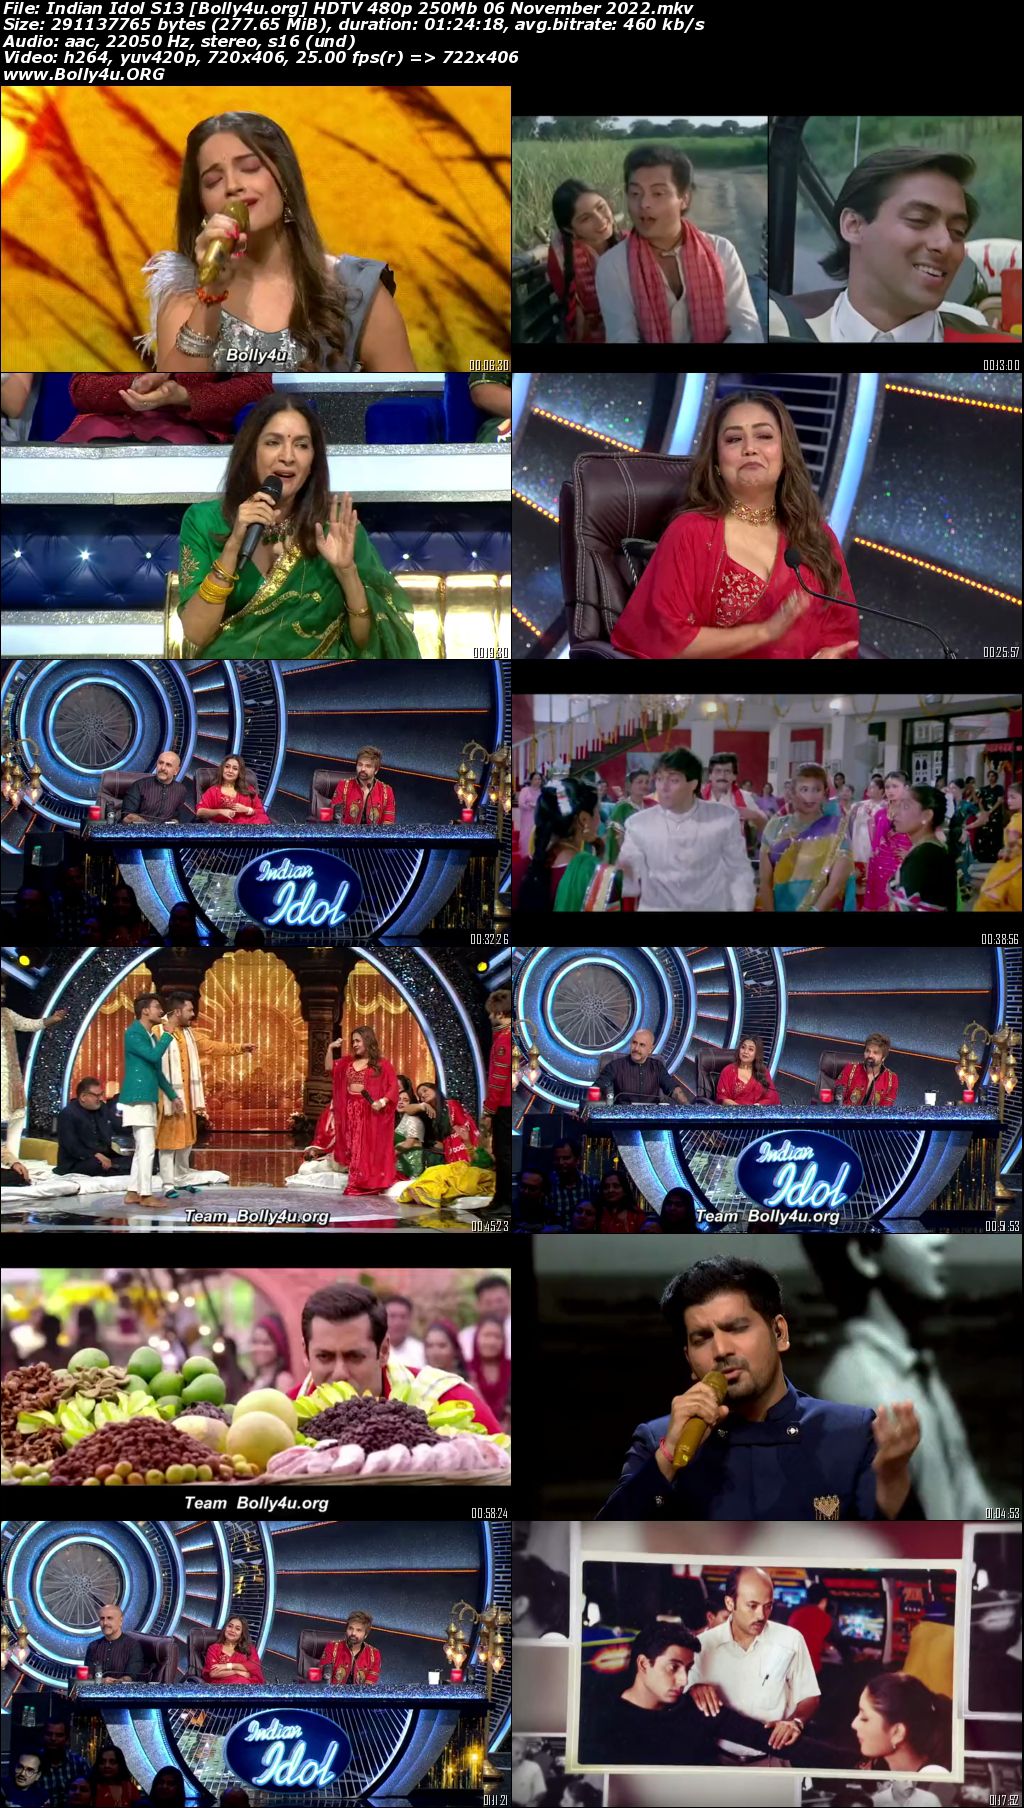 Indian Idol S13 HDTV 480p 250Mb 06 November 2022 Download